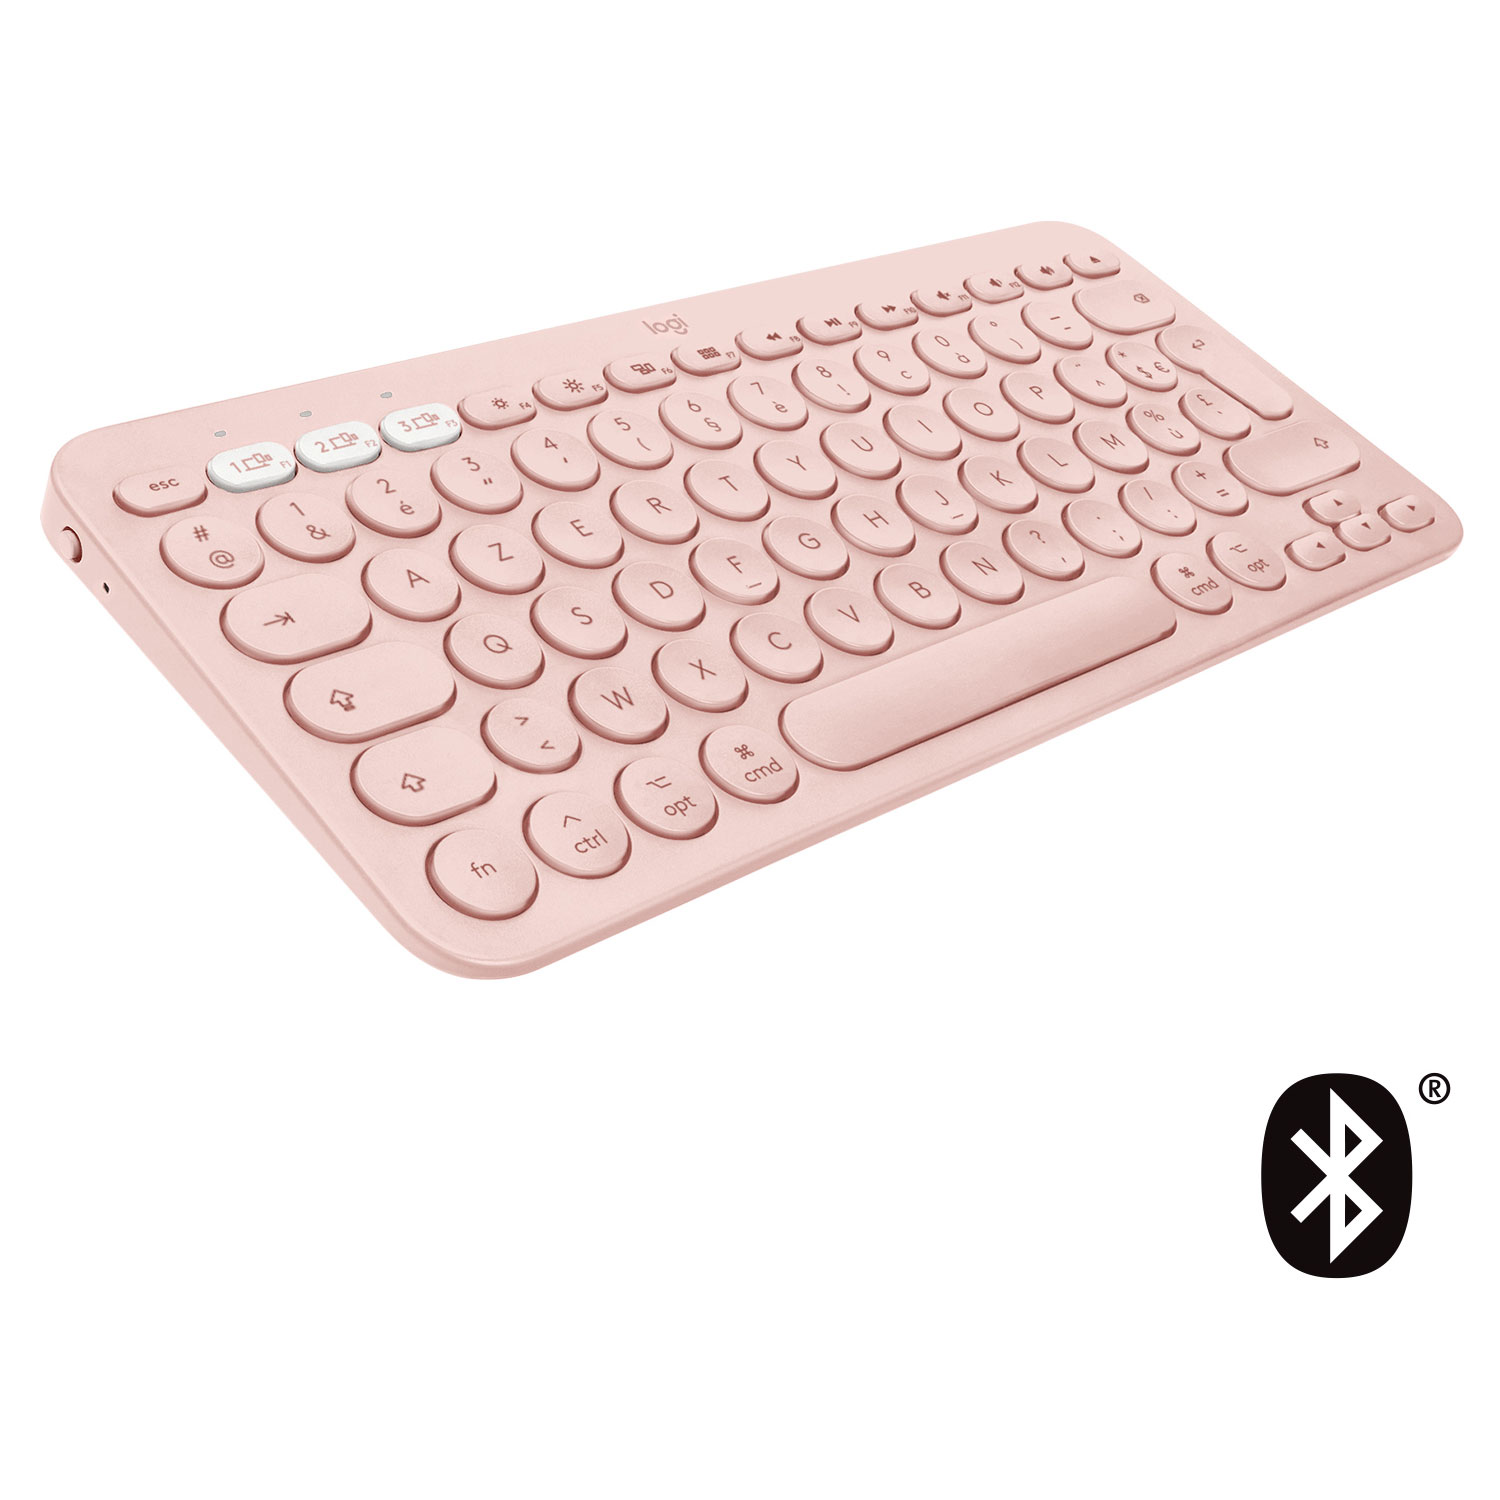 Logitech K380 Multi-Device Bluetooth Keyboard for Mac (Rose) pas cher -  HardWare.fr